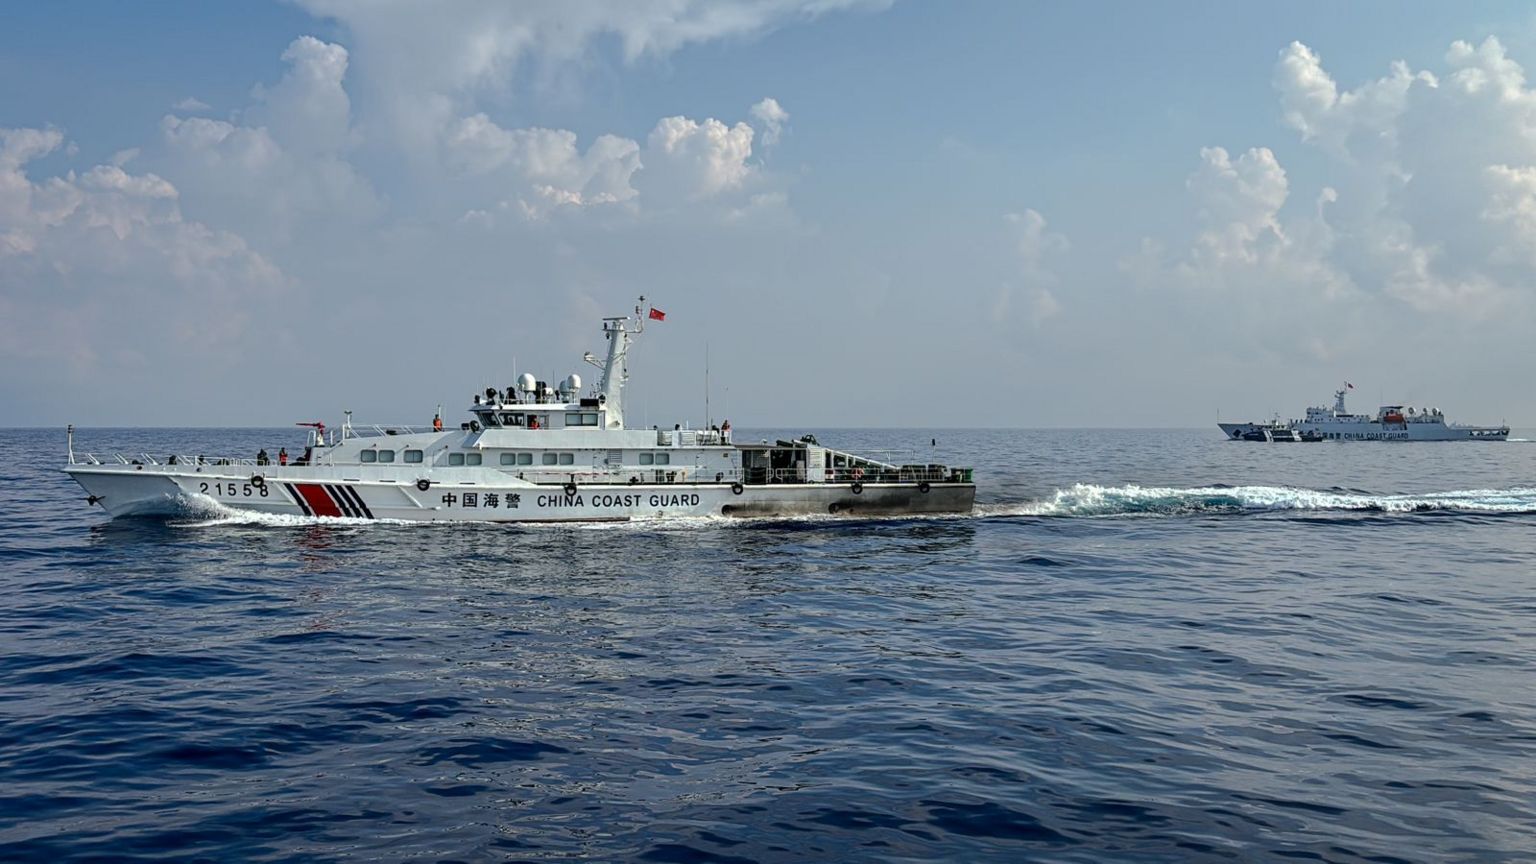 China coast guard vessels tail the BRP Bagacay